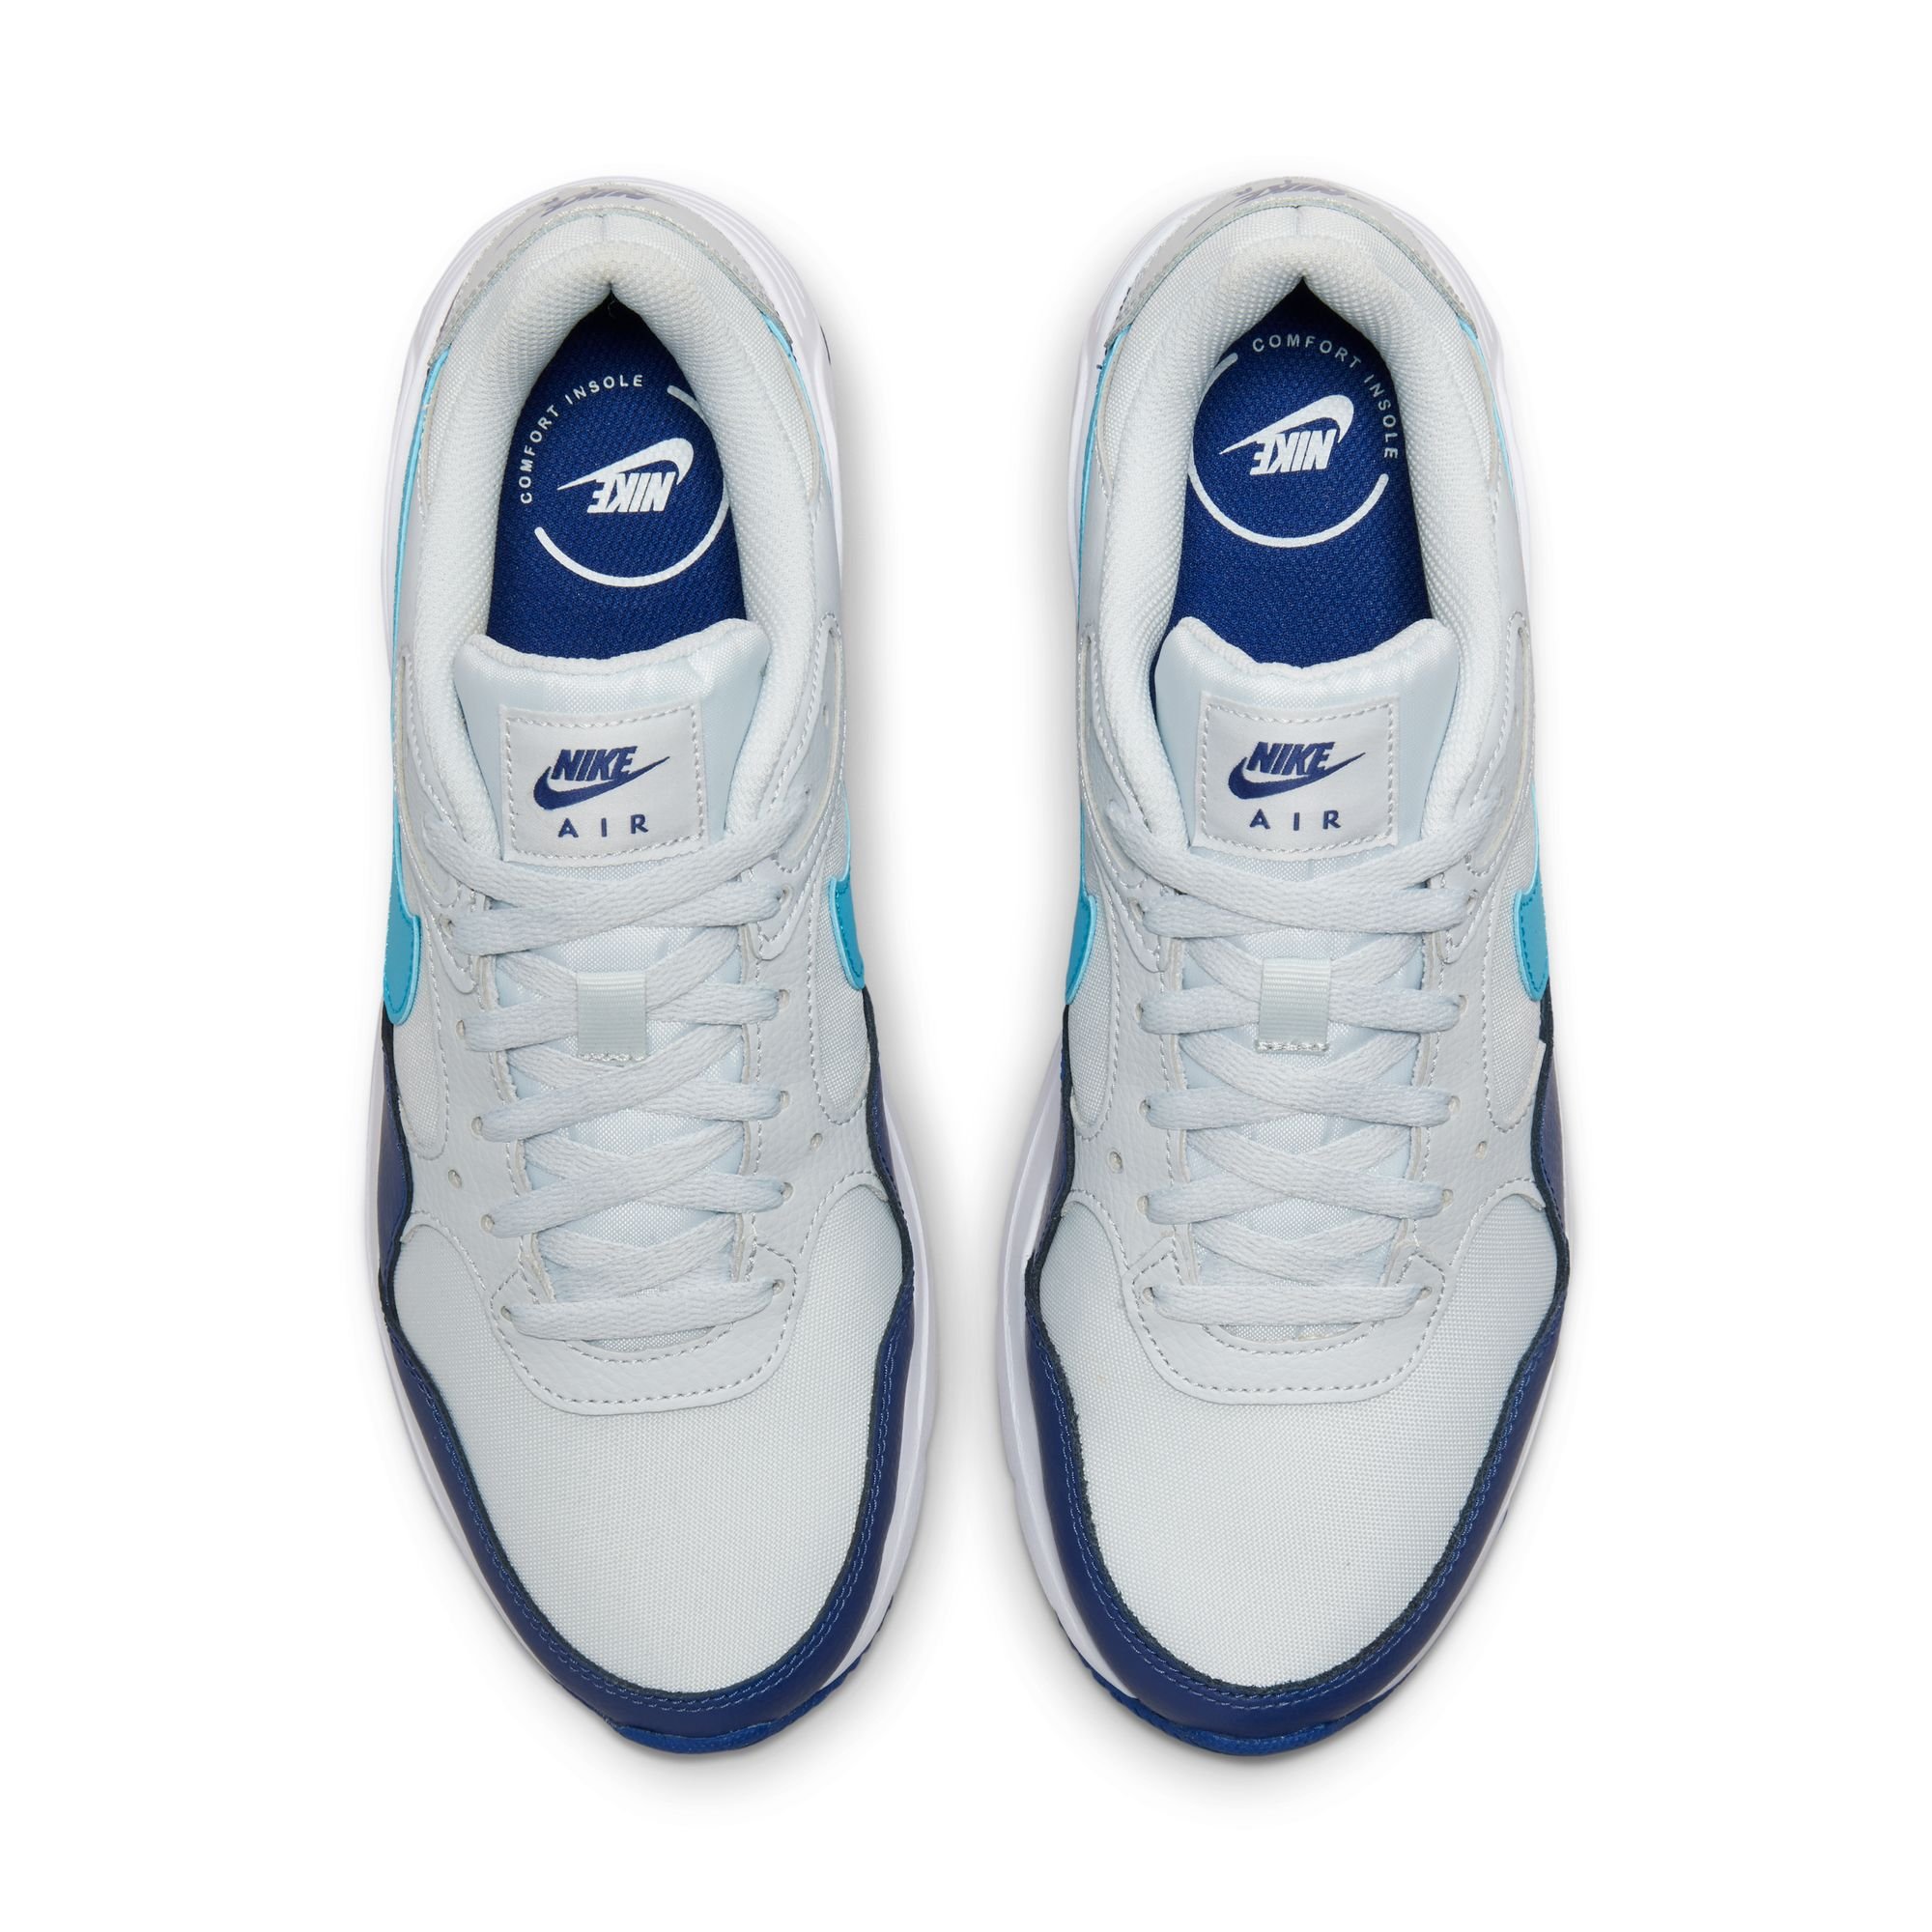 Nike Air Max SC Pure Platinum Blue Light Blue